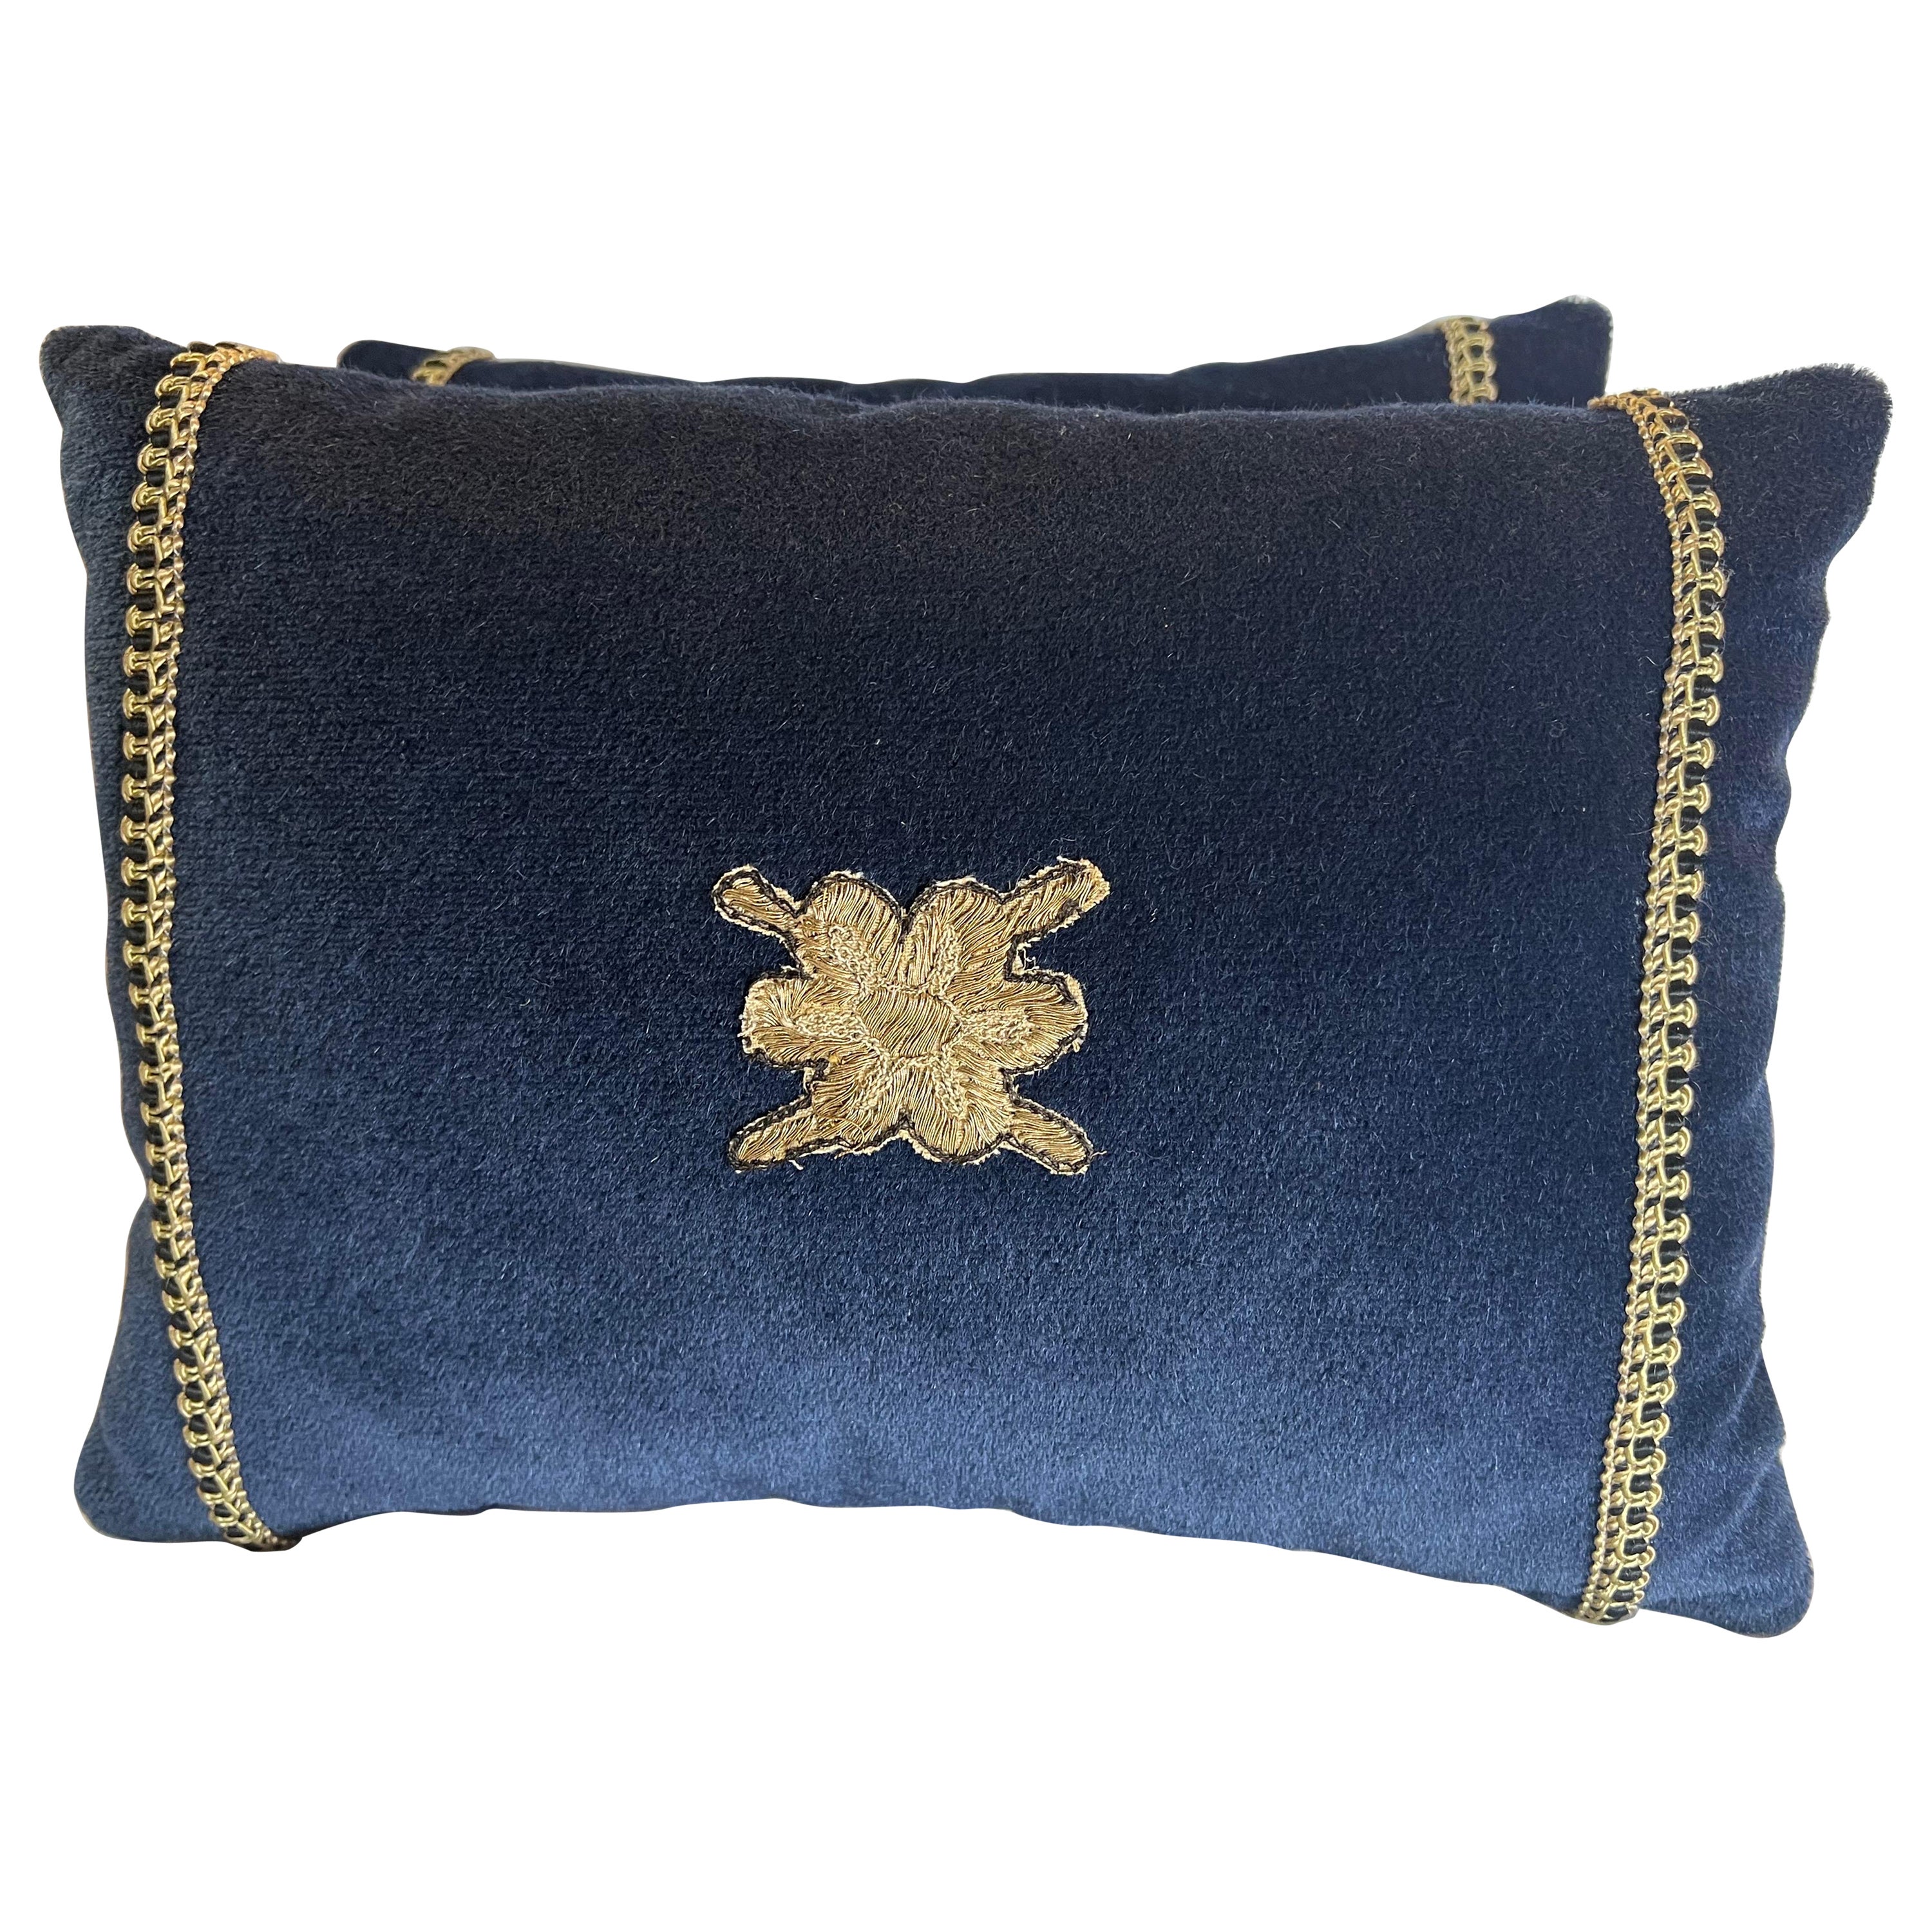 Pair of Blue Velvet Appliqued Pillows by Melissa Levinson For Sale